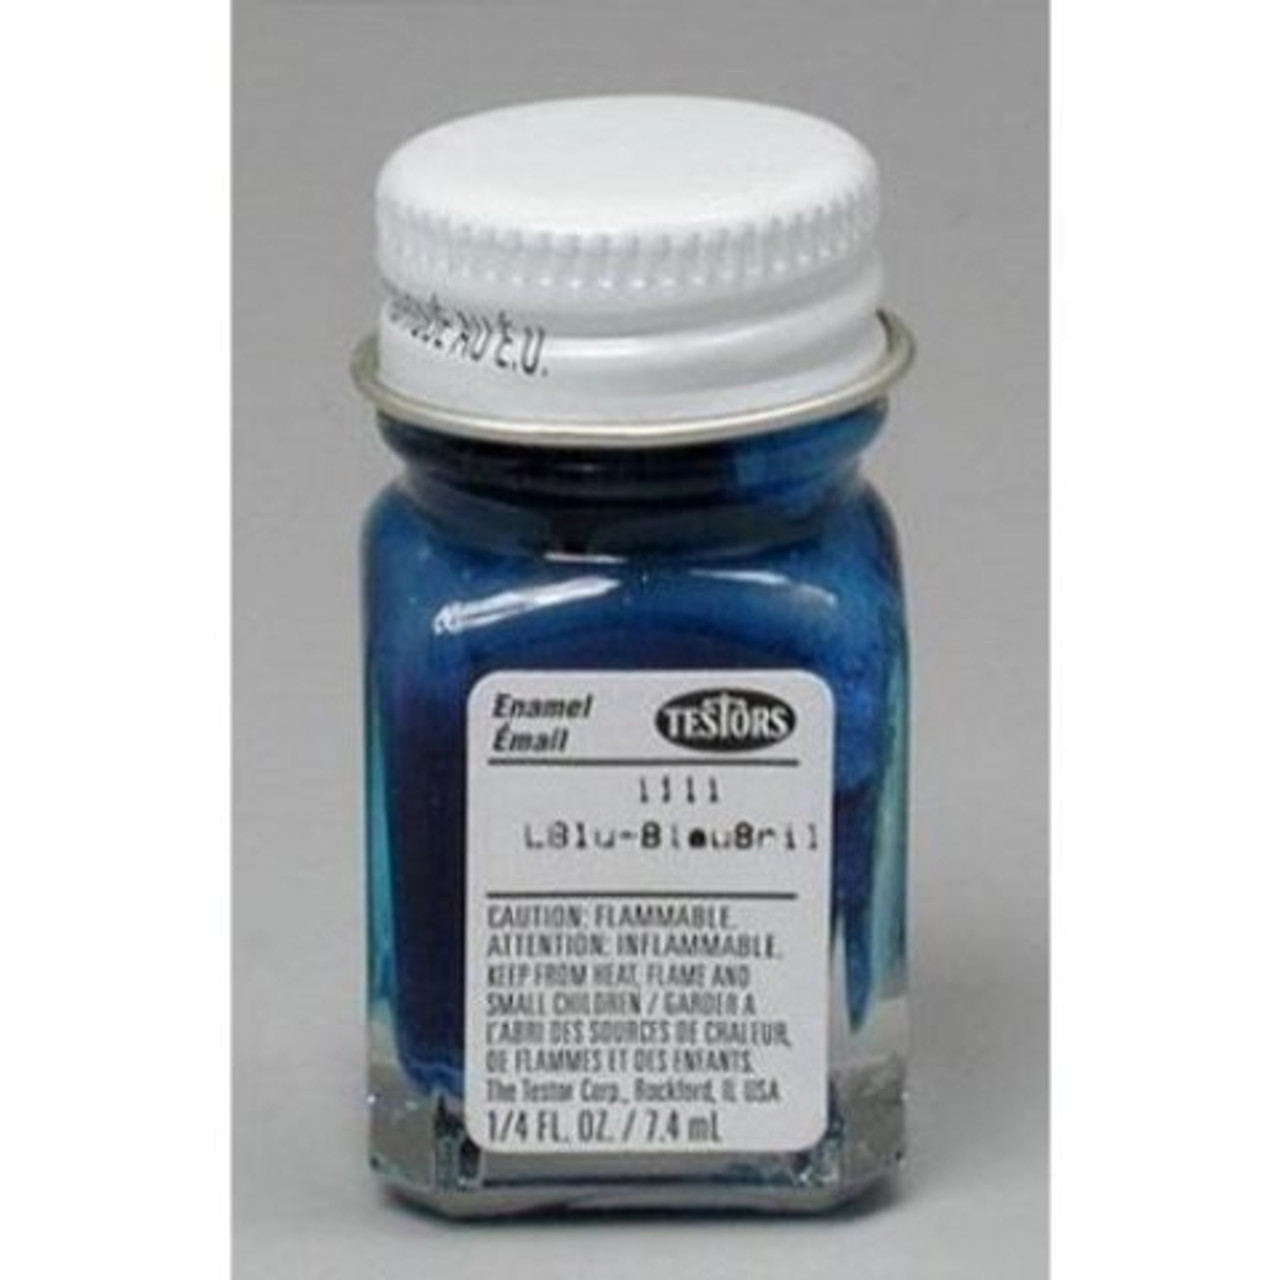 Testors Enamel Paint, Blue